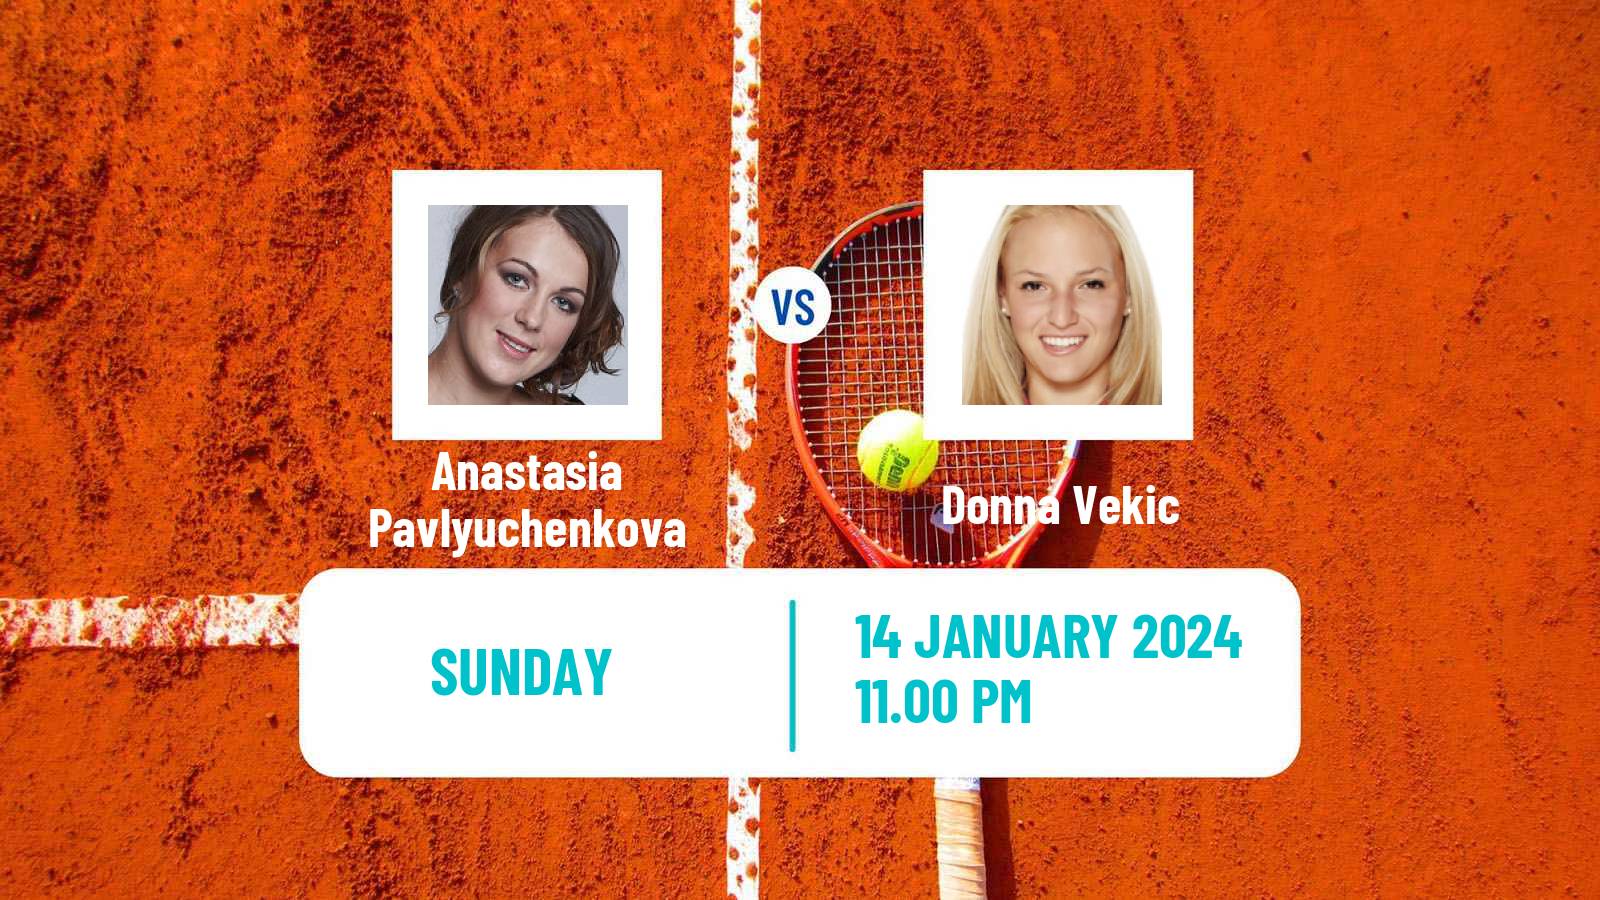 Tennis WTA Australian Open Anastasia Pavlyuchenkova - Donna Vekic